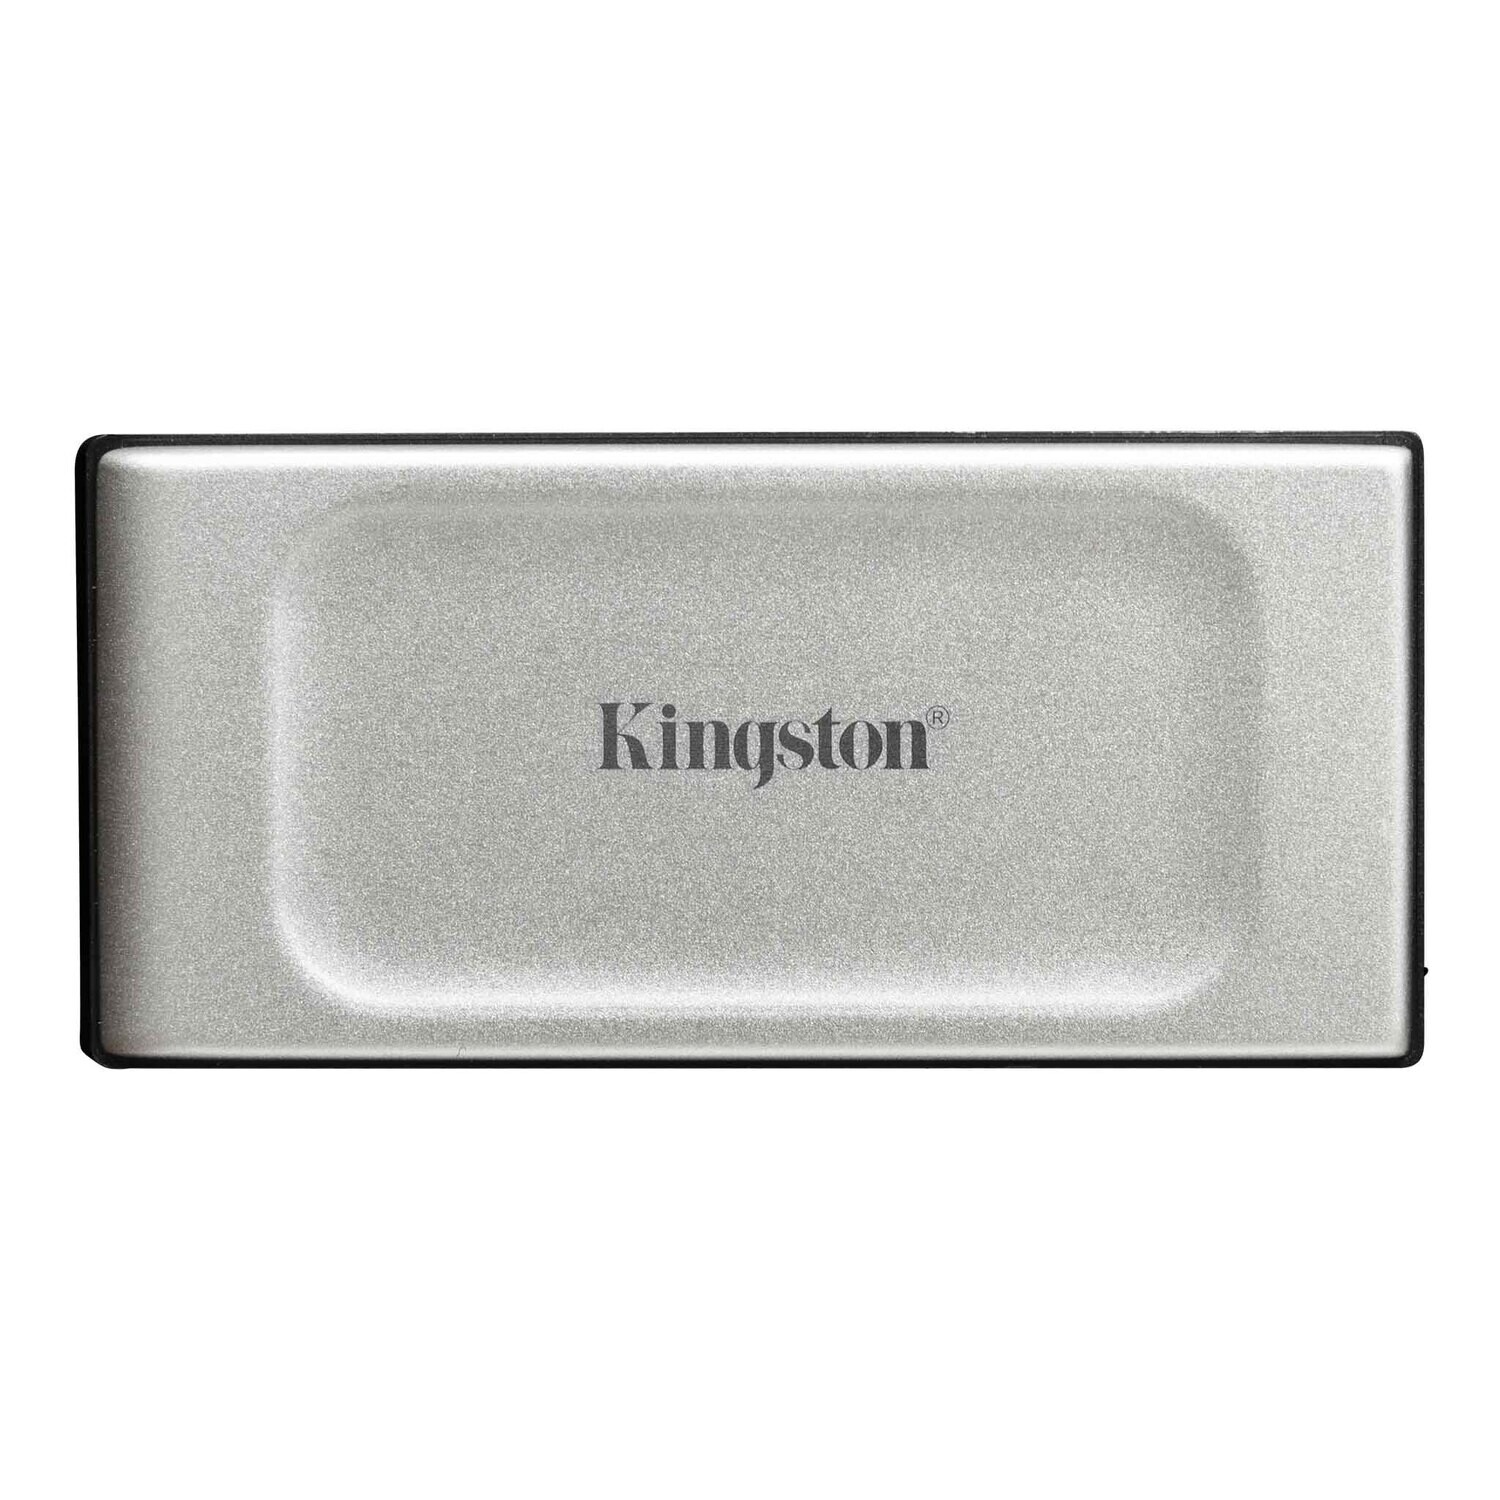 Kingston XS2000 External Solid State Drive (SSD)
USB Type-C 3.2 Gen 2x2 Portable Drive